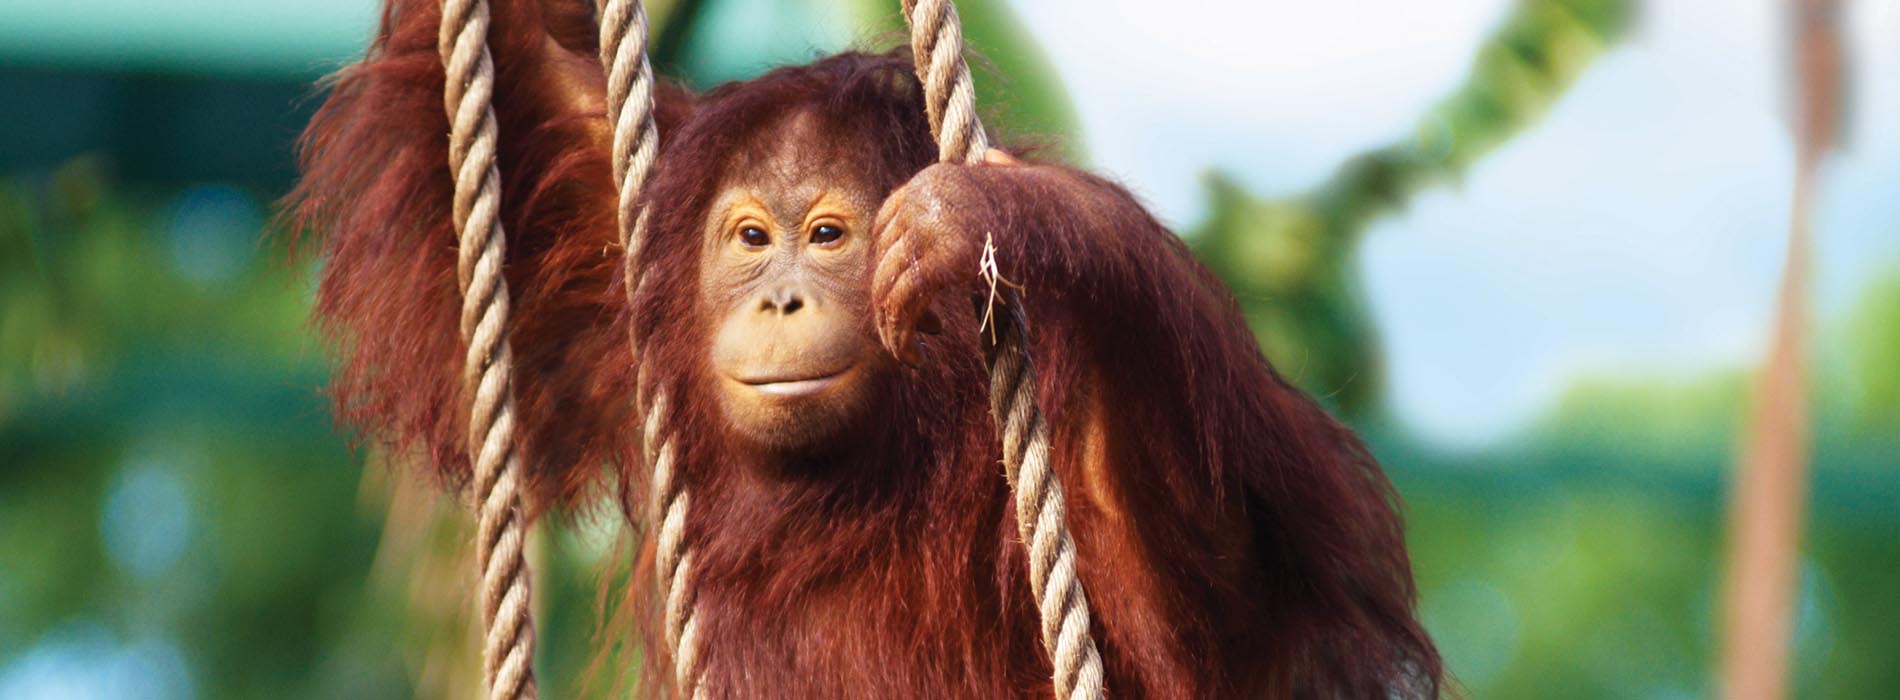 An adult orangutan on a rope swing